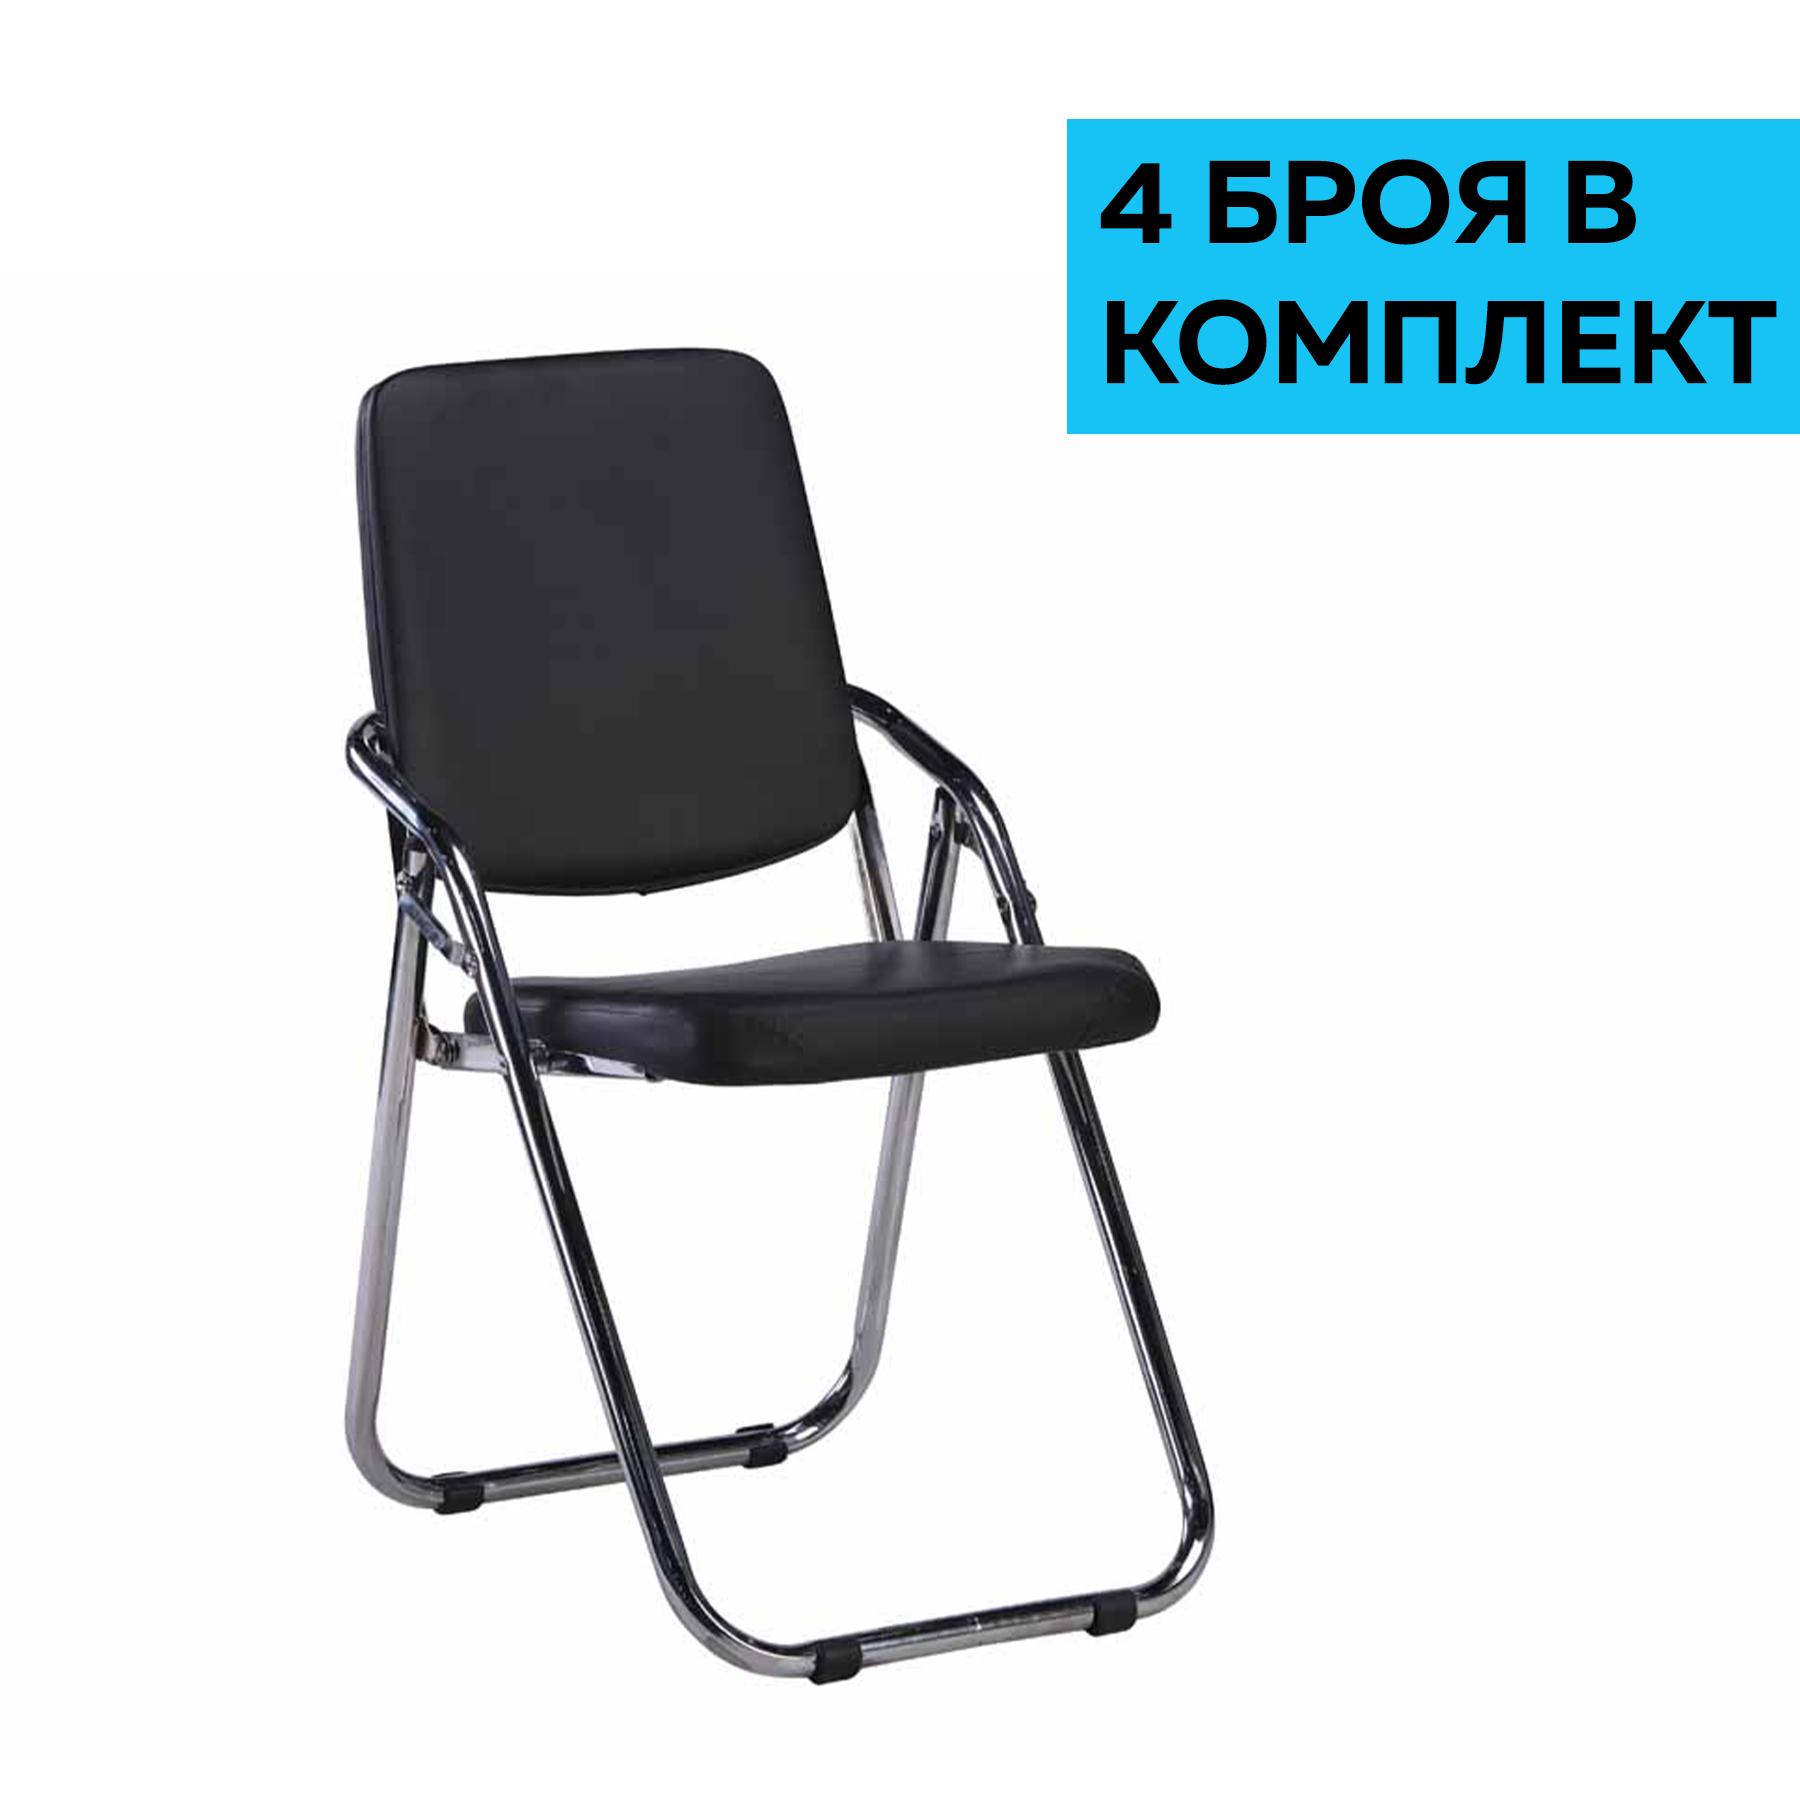 RFG Посетителски стол Fold, сгъваем, екокожа, черен, 4 броя в комплект